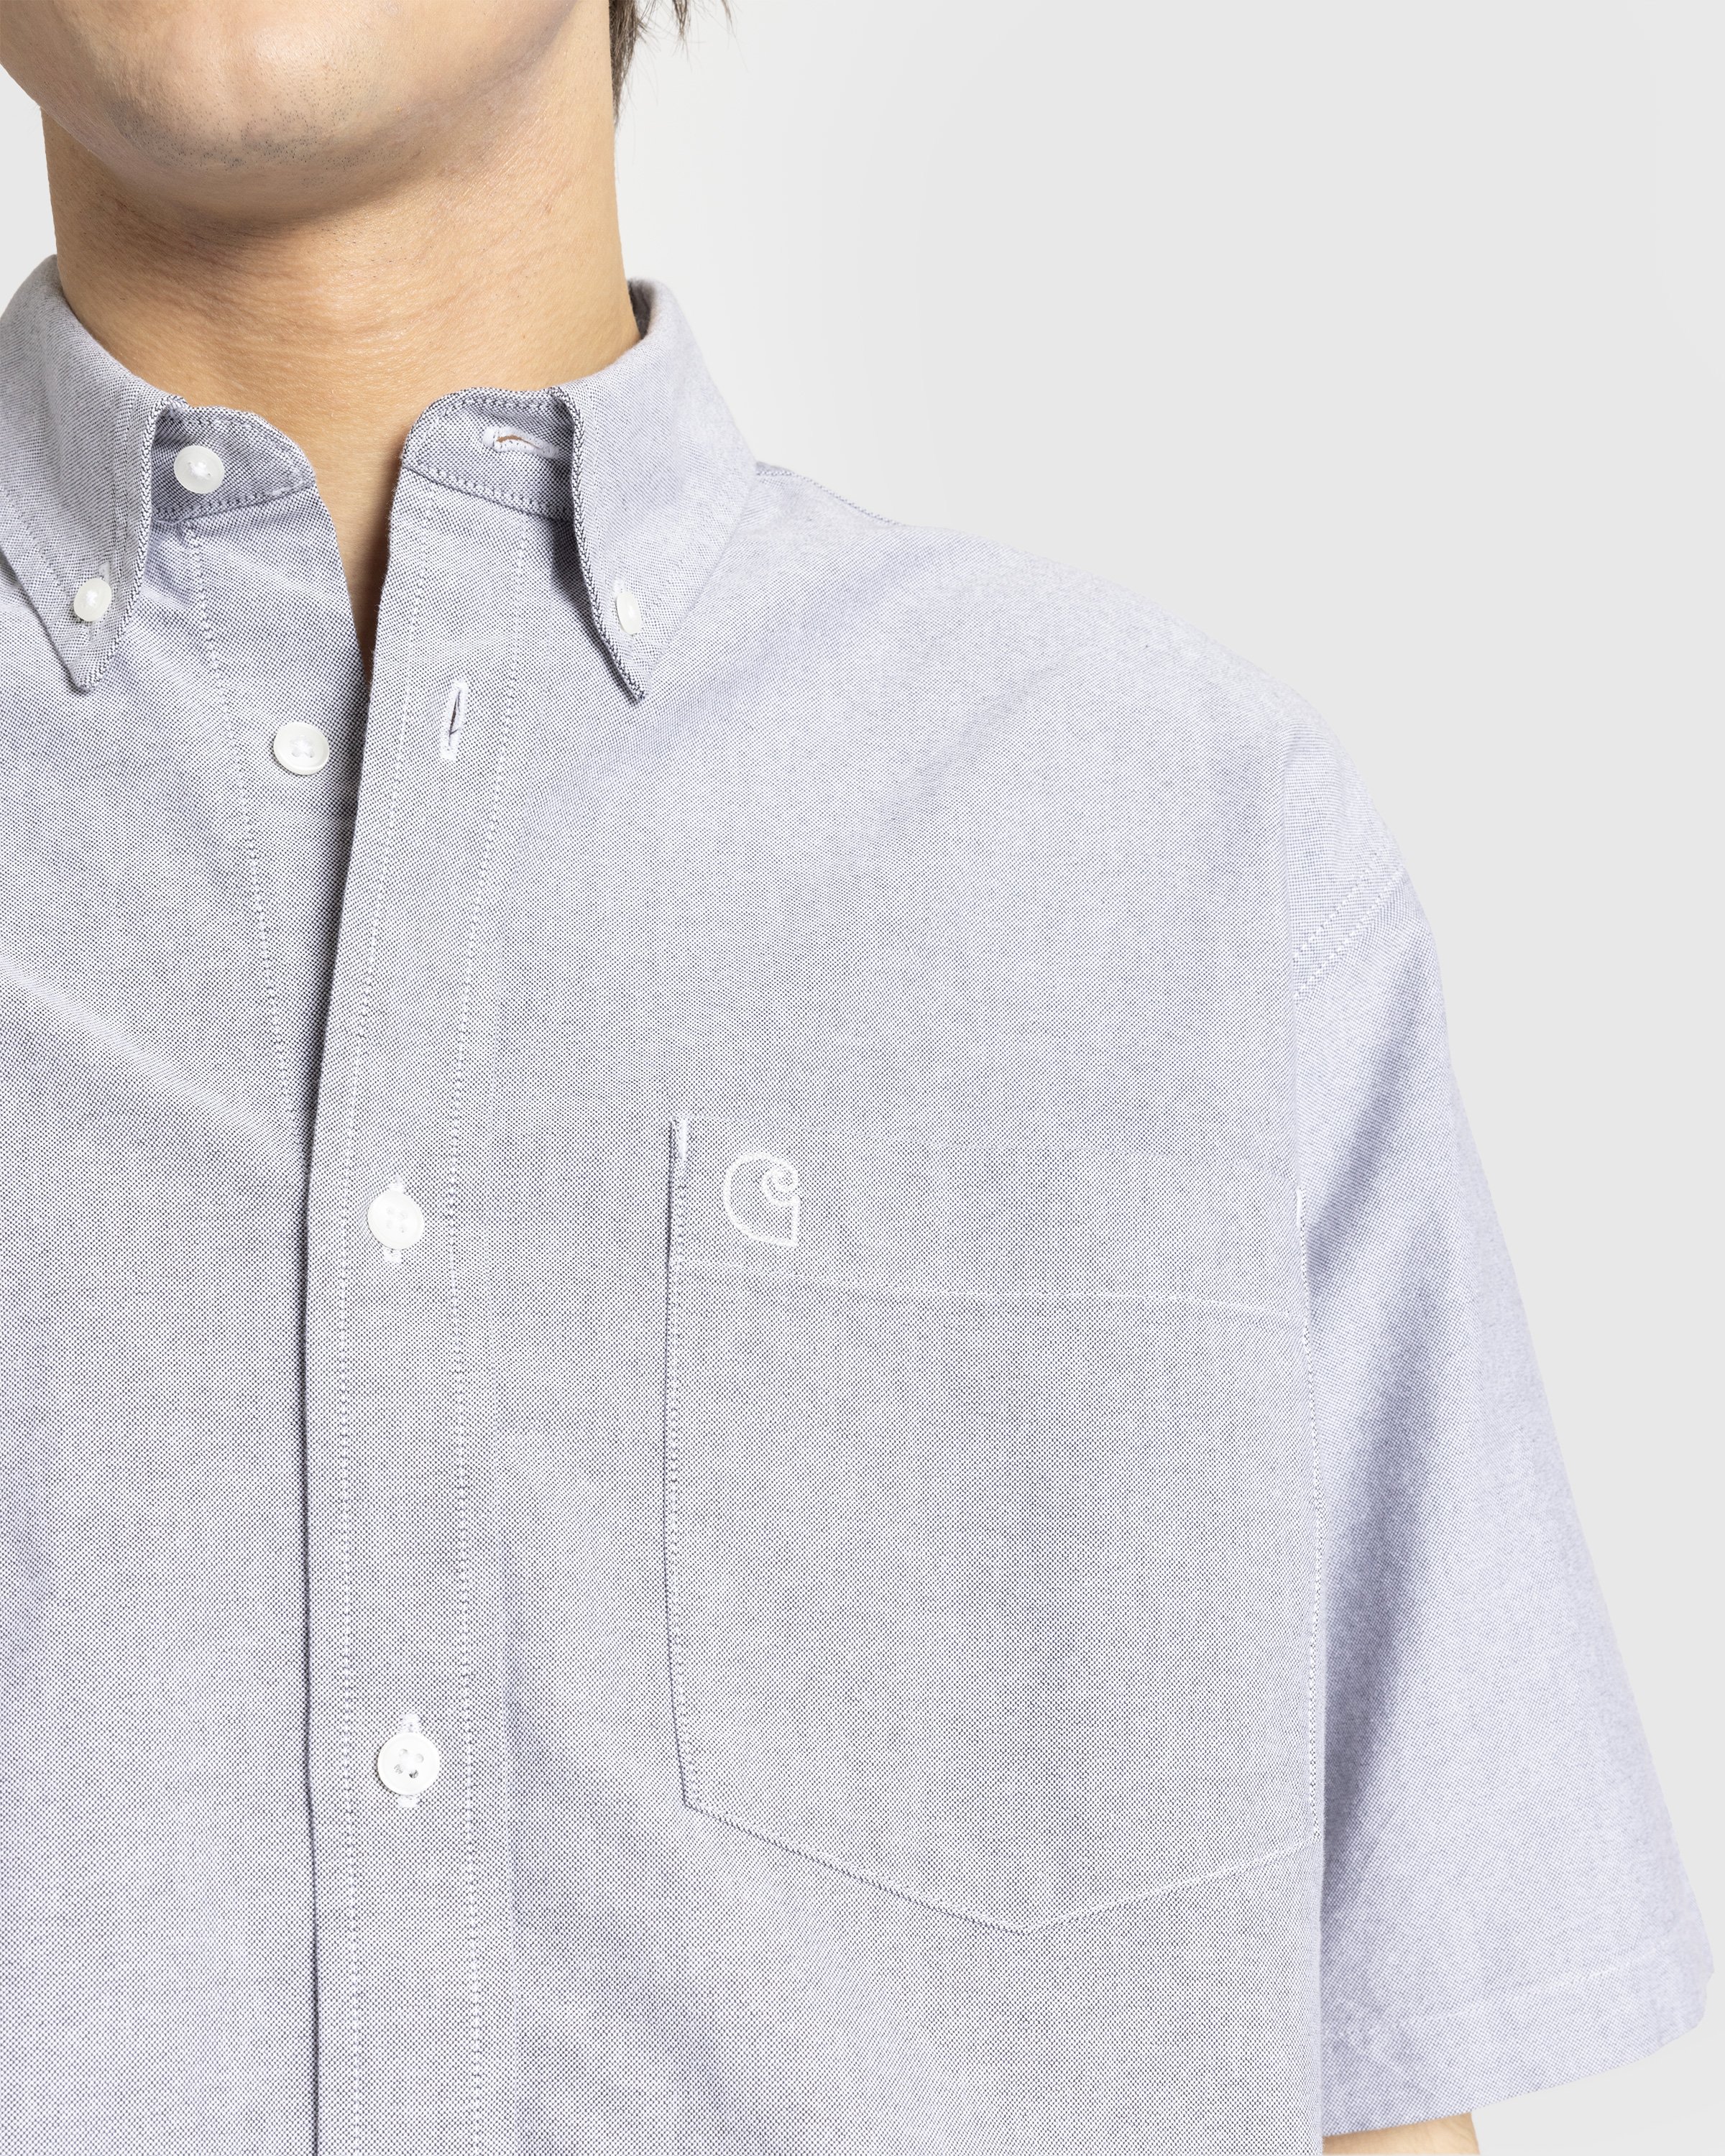 Carhartt WIP - S/S Braxton Shirt Charcoal / Wax - Clothing - Grey - Image 5